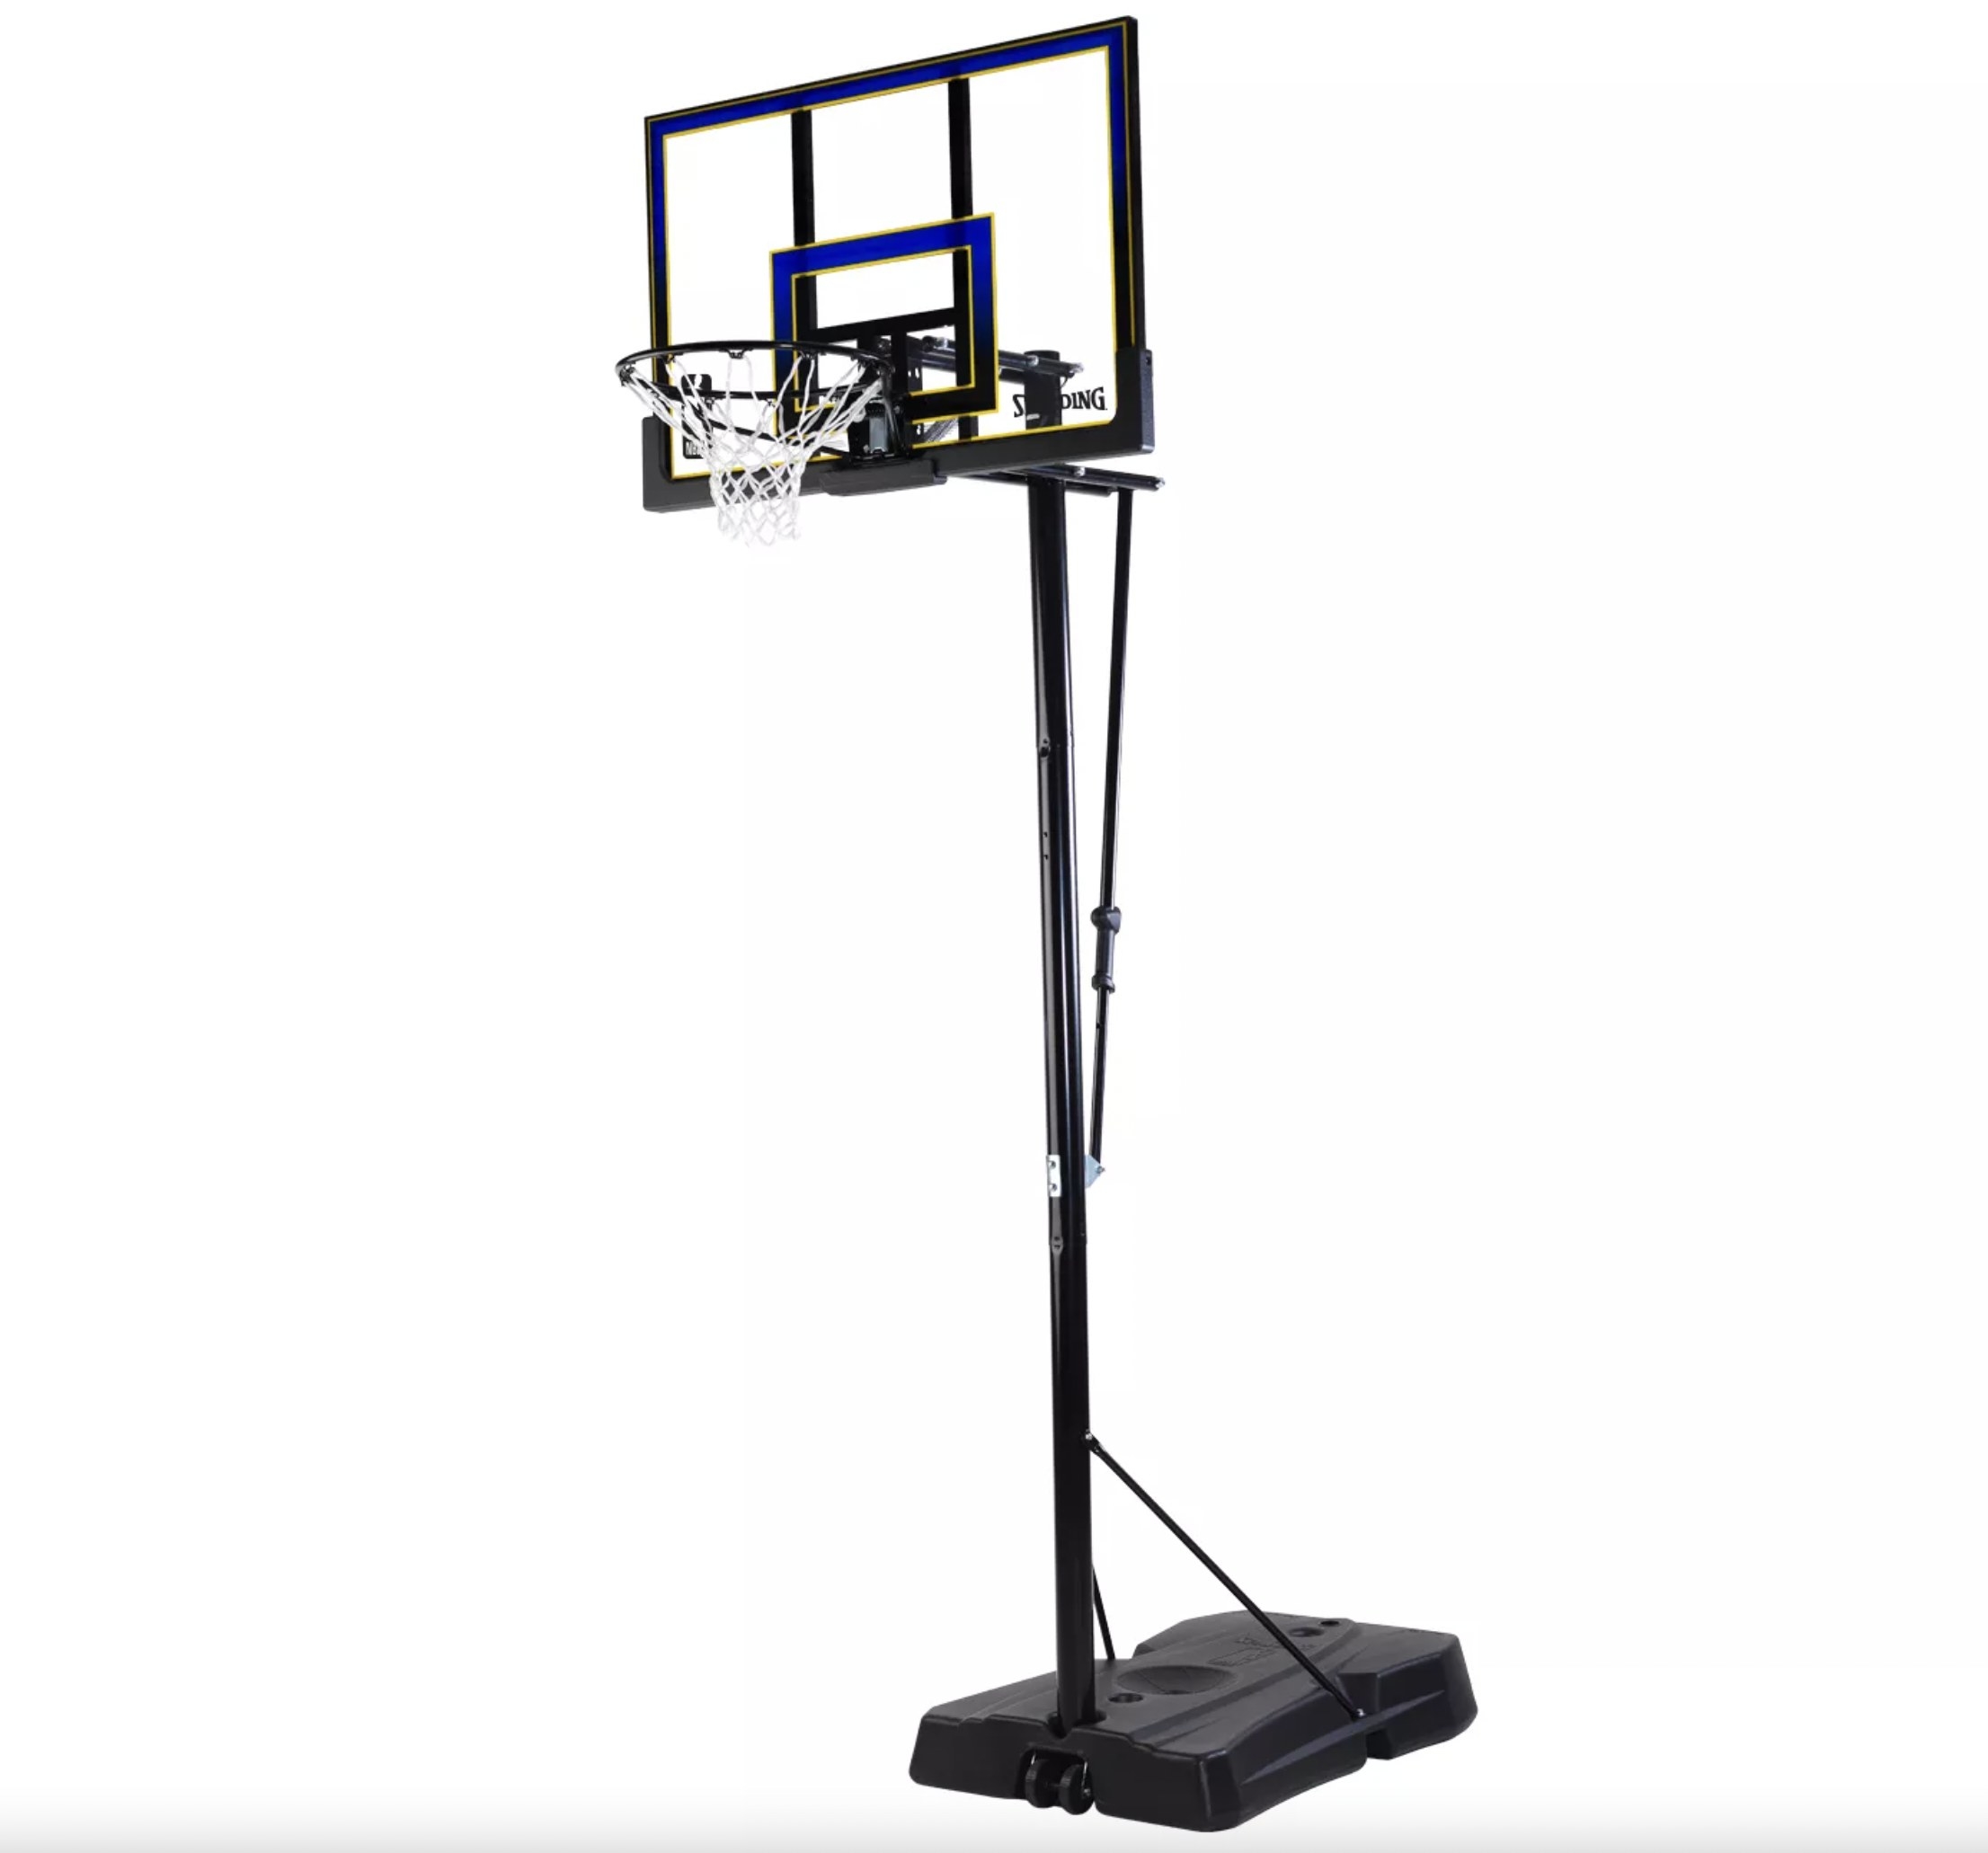 The Basketball Hoop